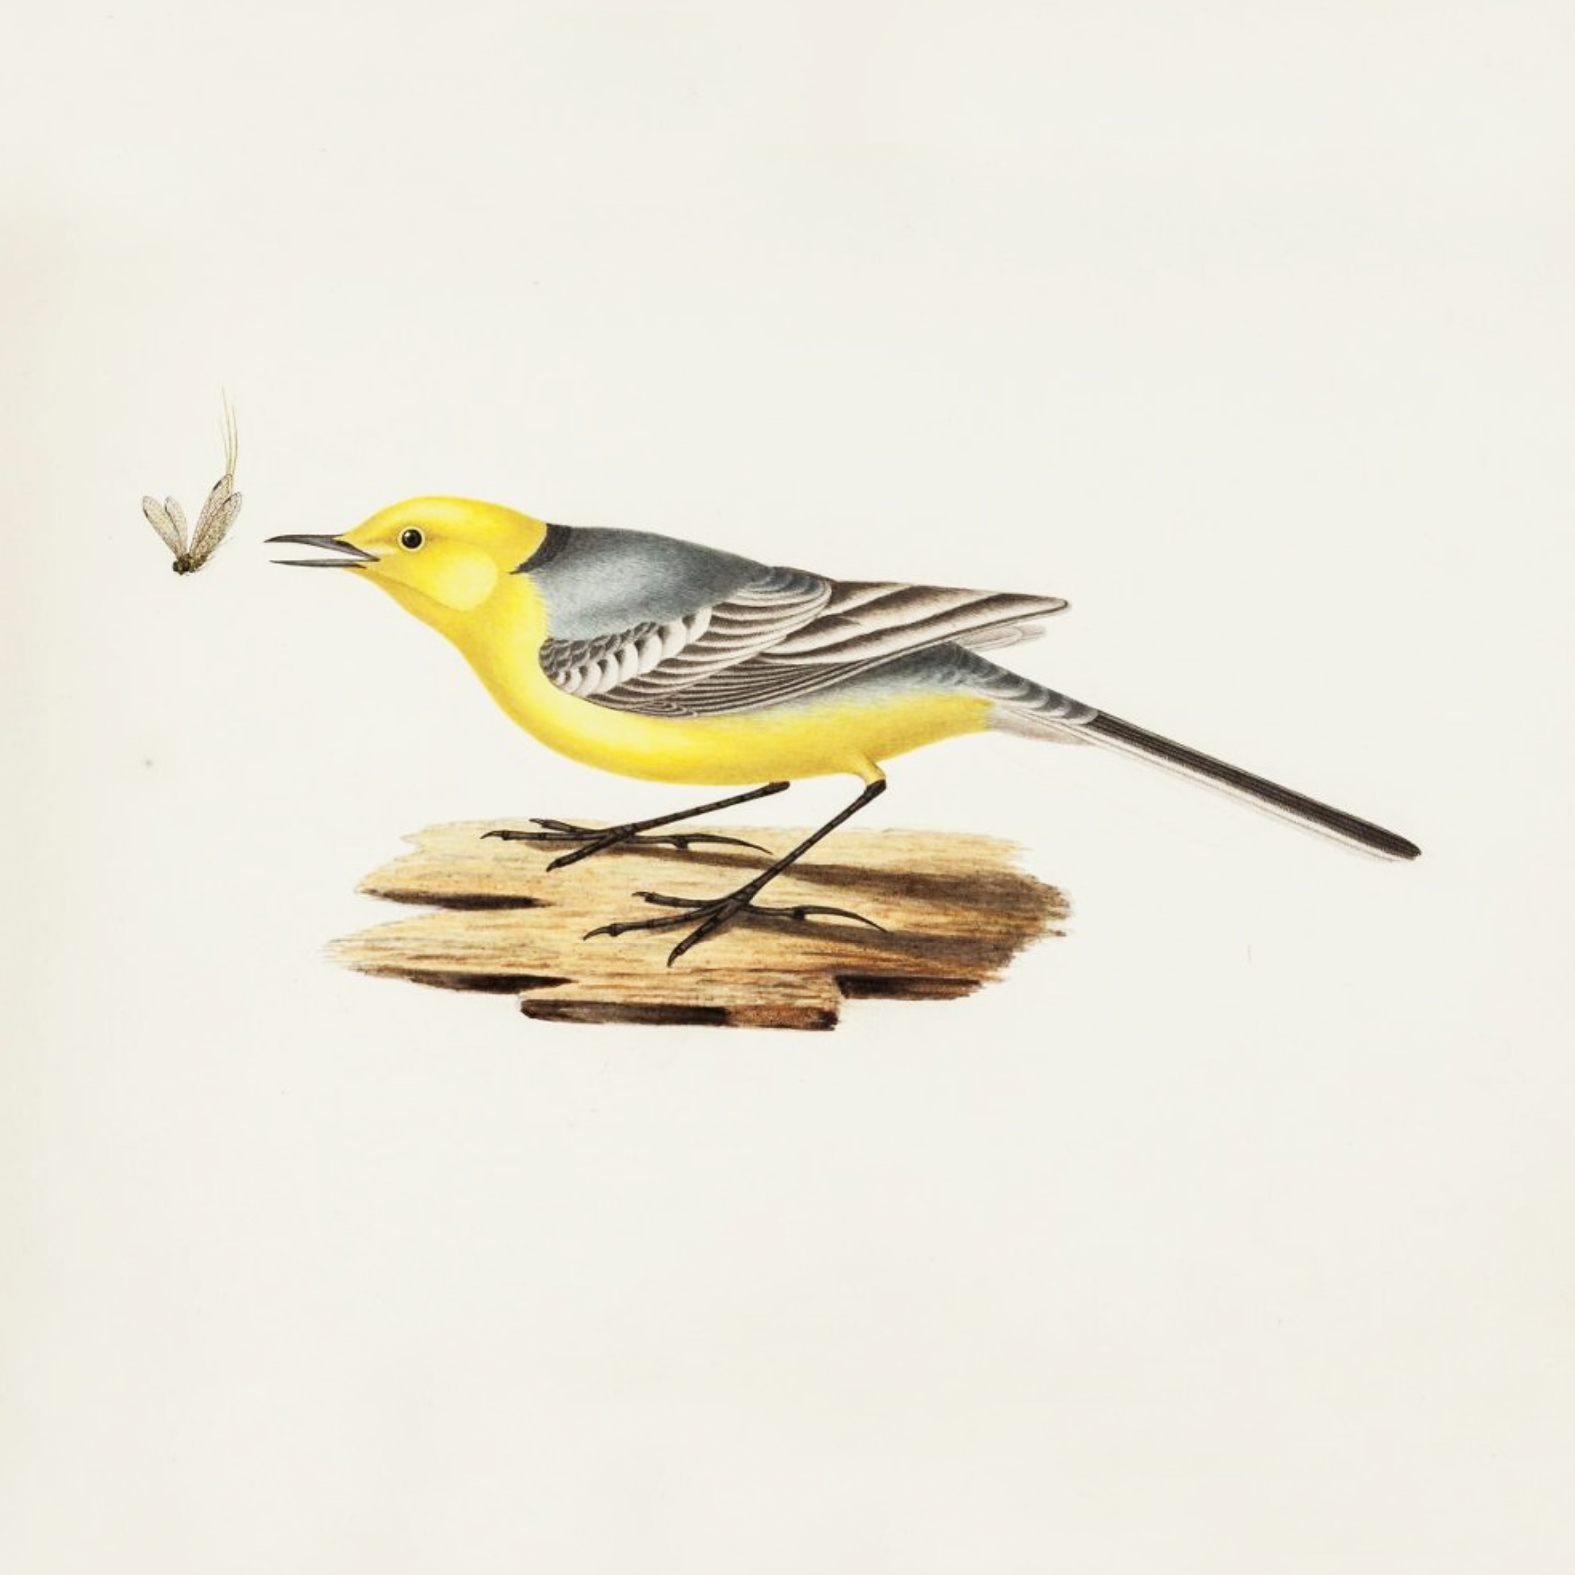 Желтая трясогузка. Лист из альбома «Птички» Борисов П. И. Начало 1840-х гг.